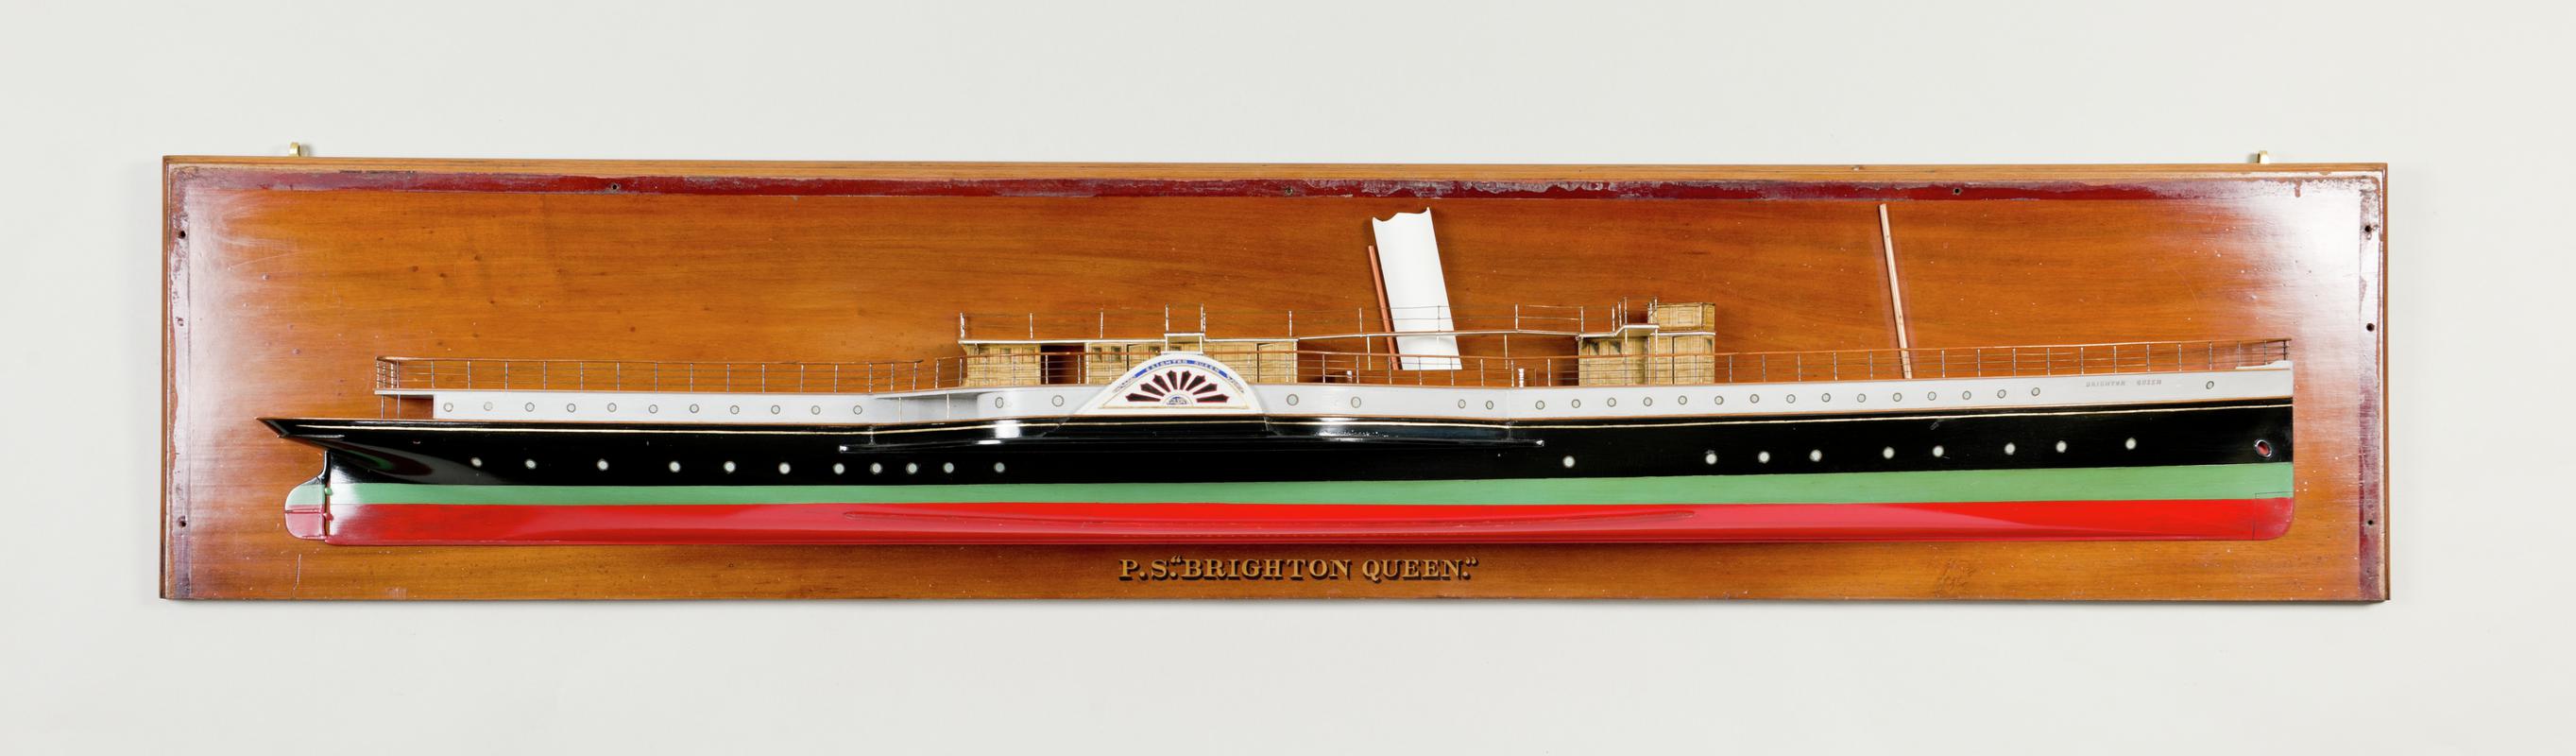 Half hull ship model of the P.S. BRIGHTON QUEEN